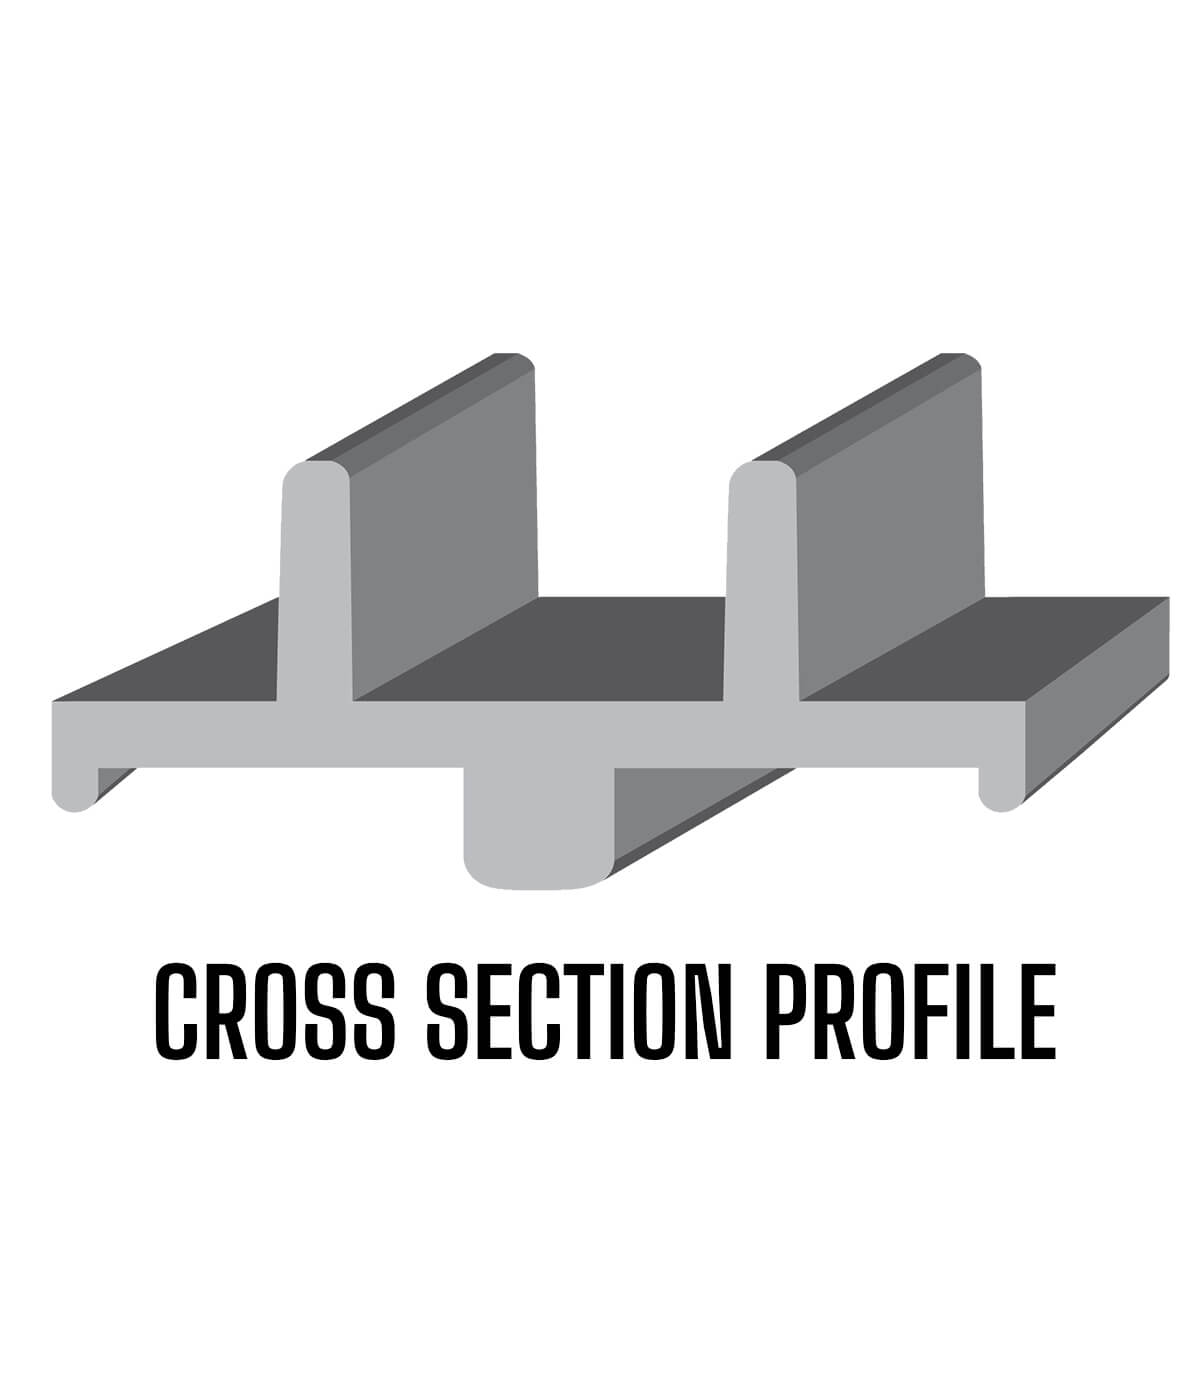 C&A Pro Skis MTX ski cross section profile